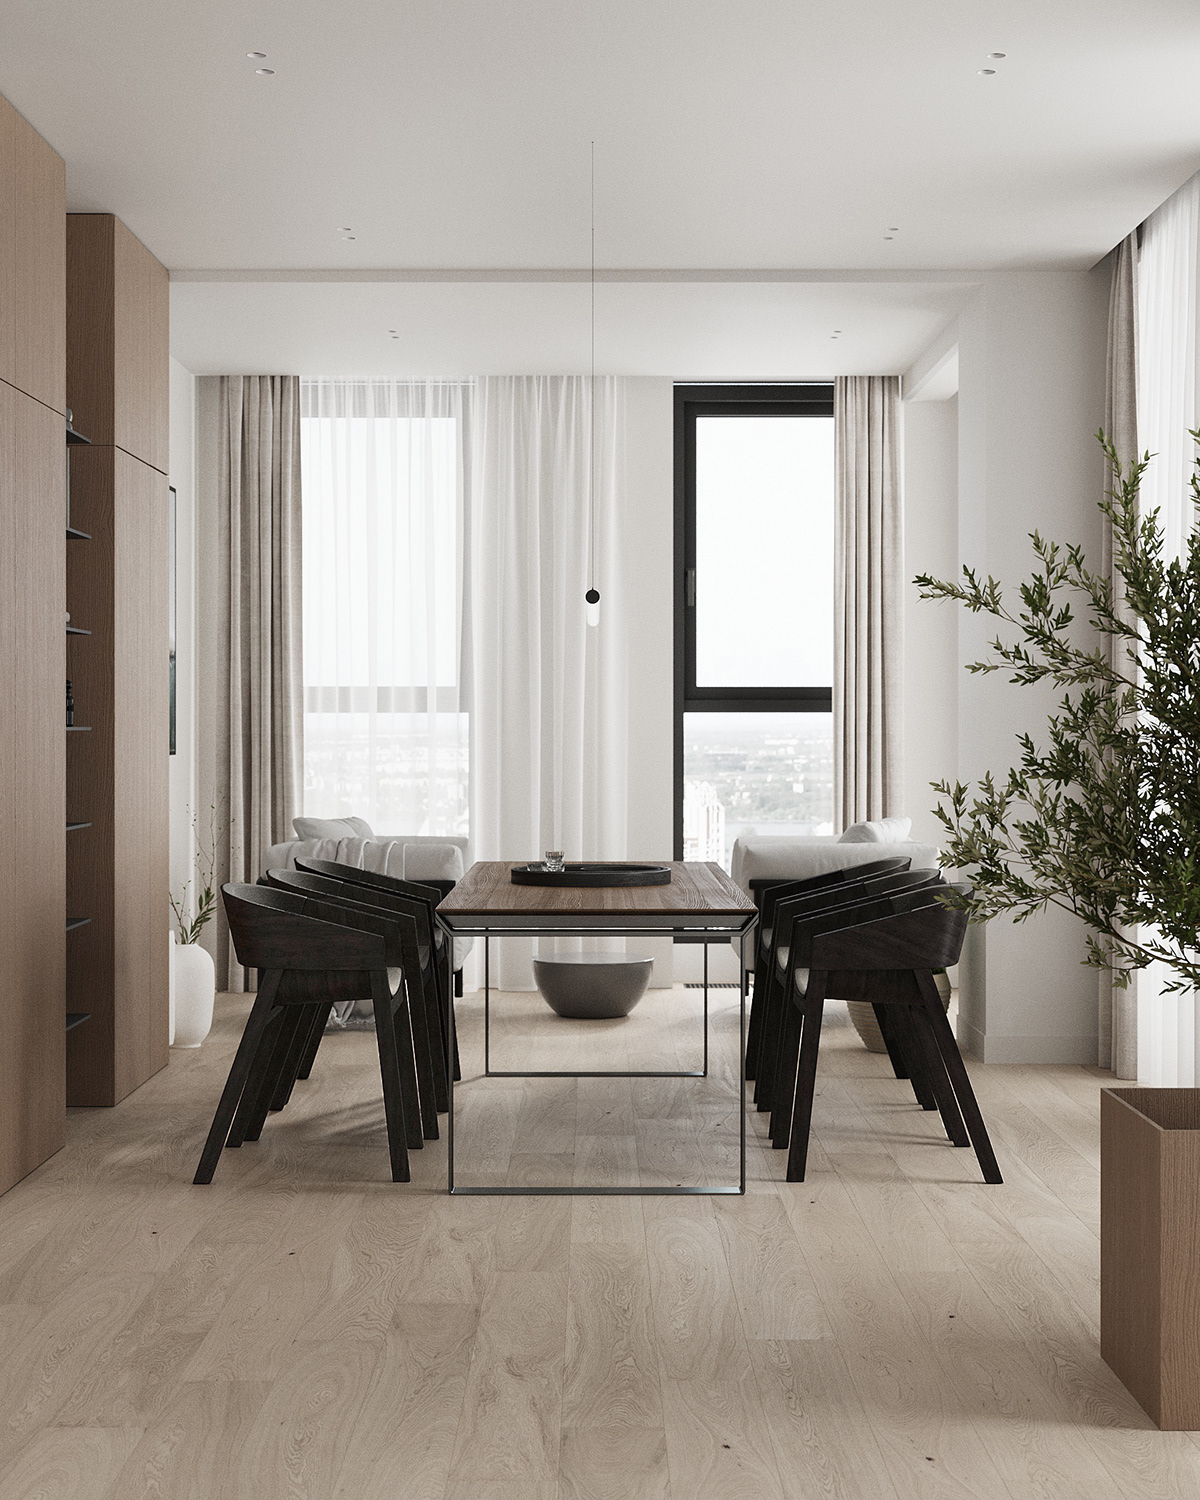 3ds max archviz CGI corona Interior interior design  kitchen living room Render visualization